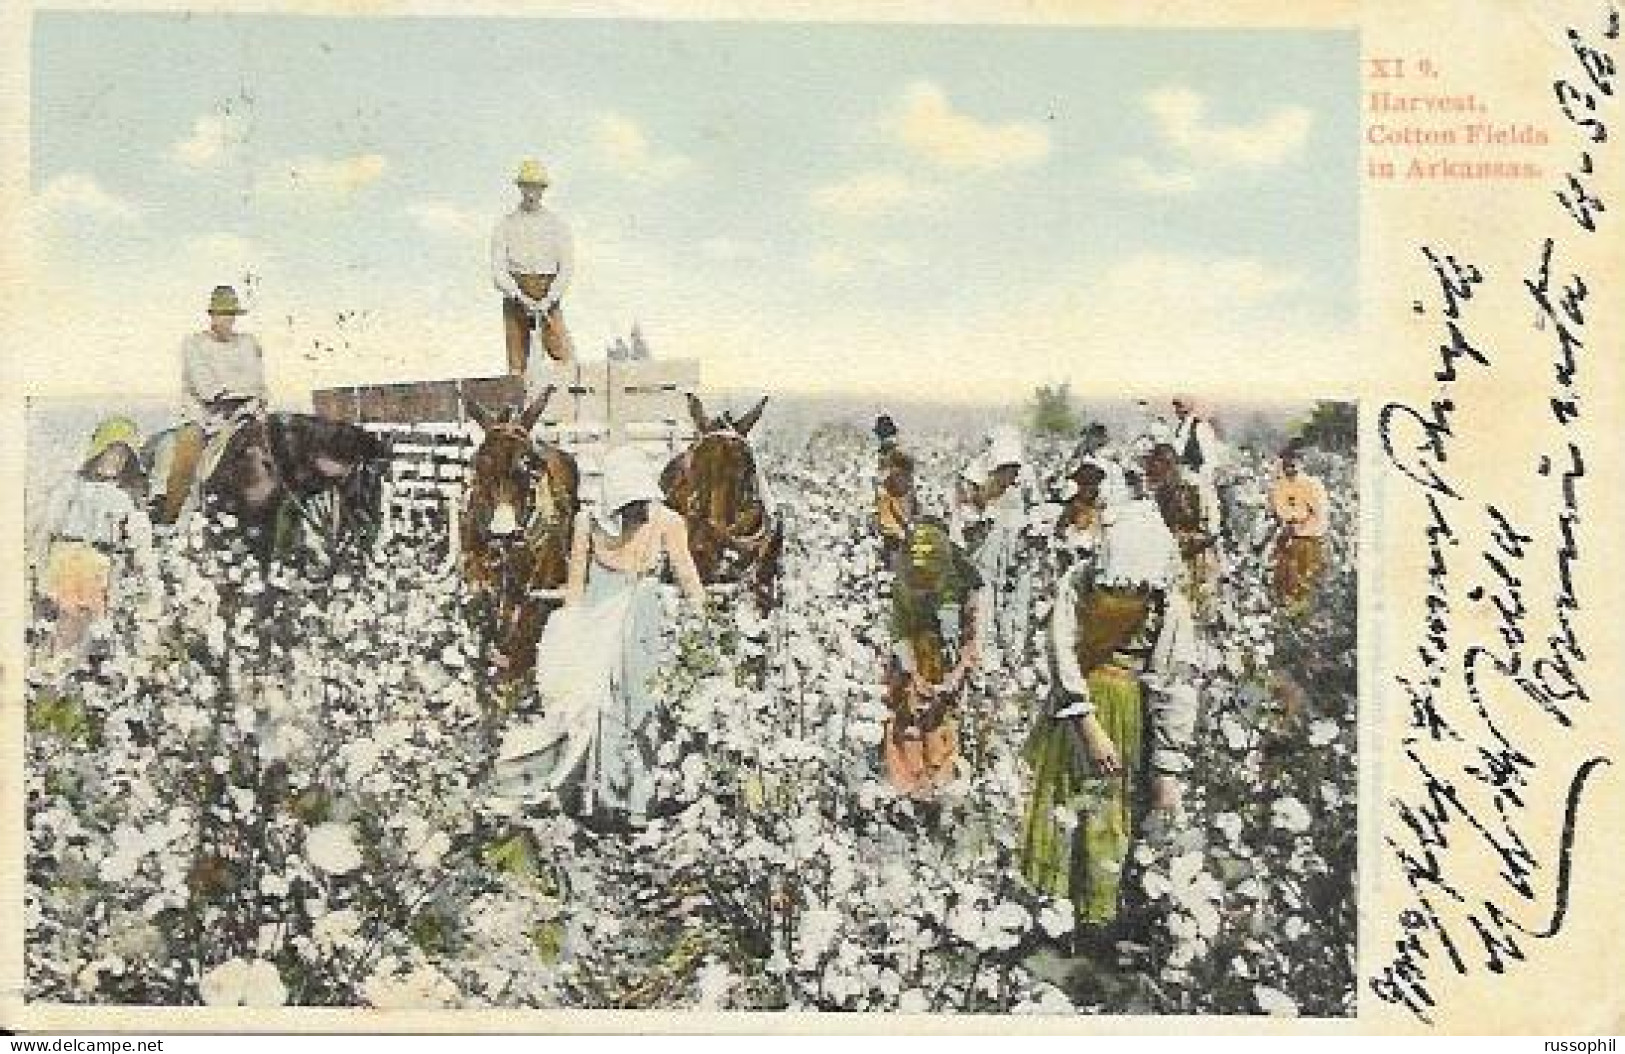 USA - BLACK AMERICANA -  HARVEST COTTON FIELDS IN ARKANSAS - 1906 - Black Americana